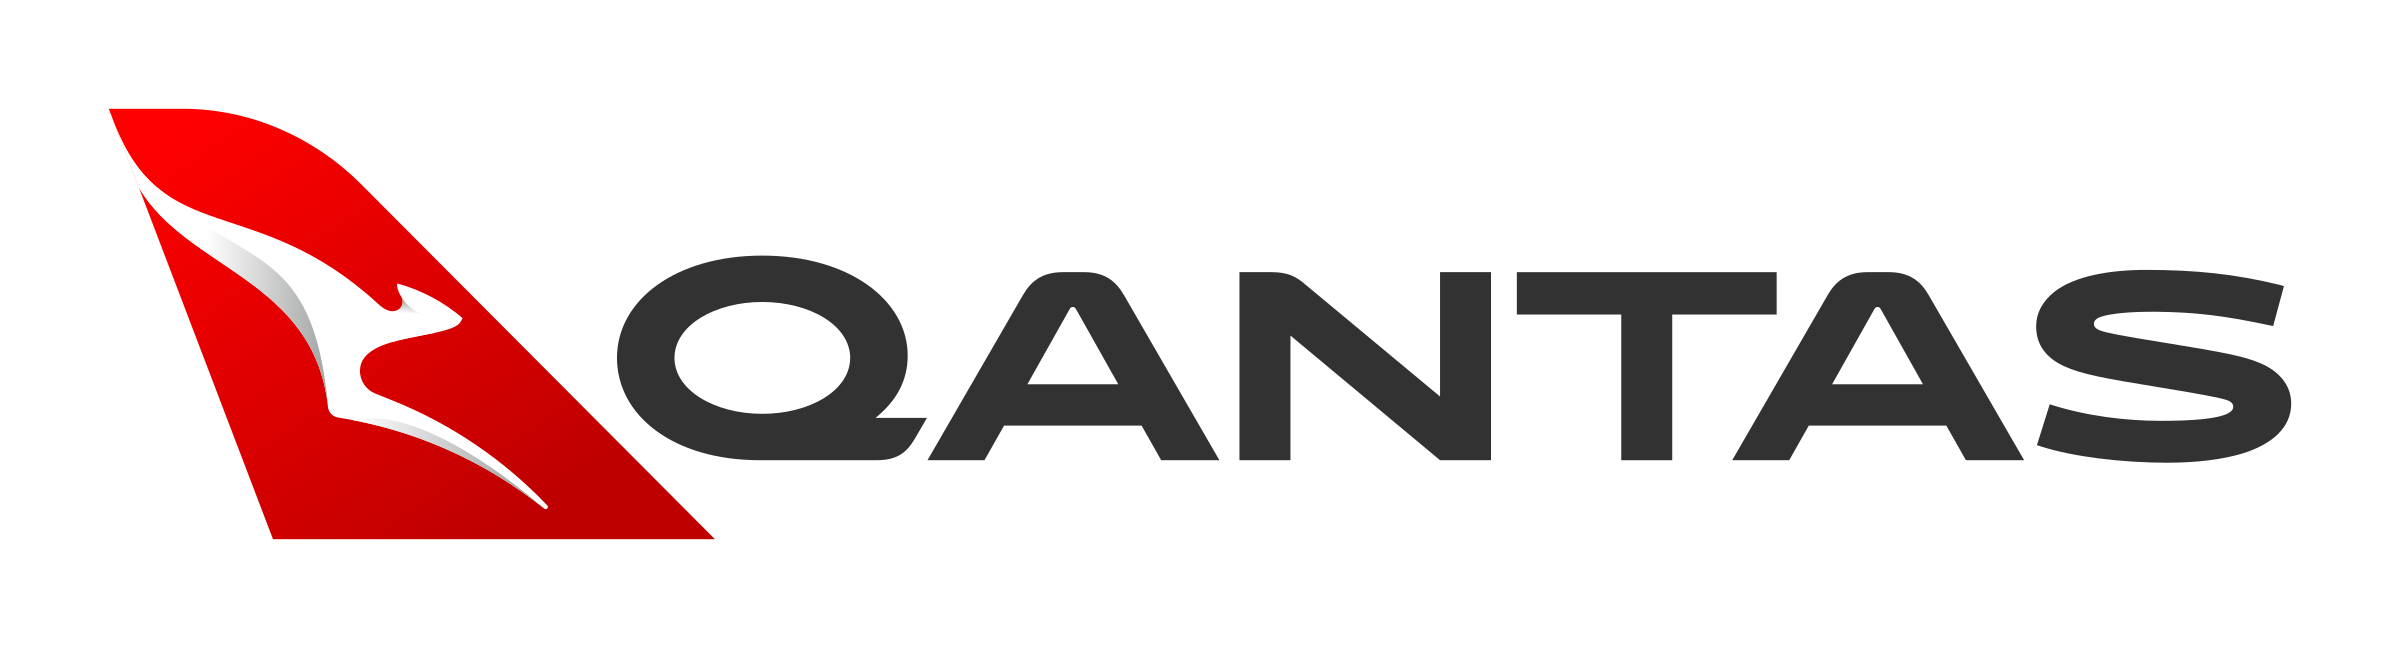 "Qantas logo"